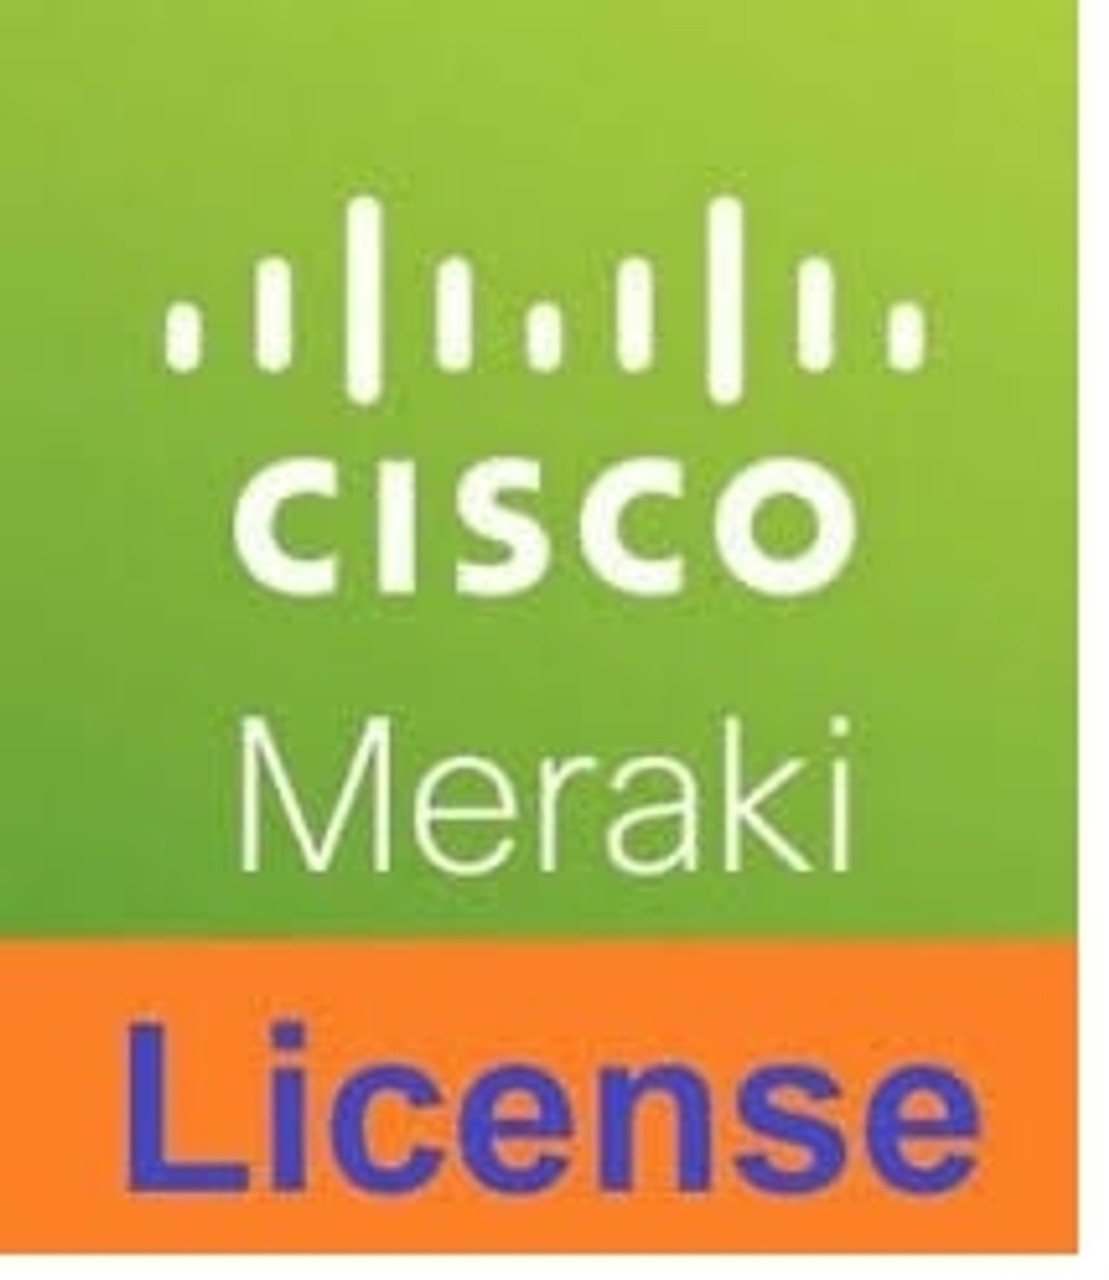 EOS Meraki MS220-48 Enterprise License and Support, 10 Year